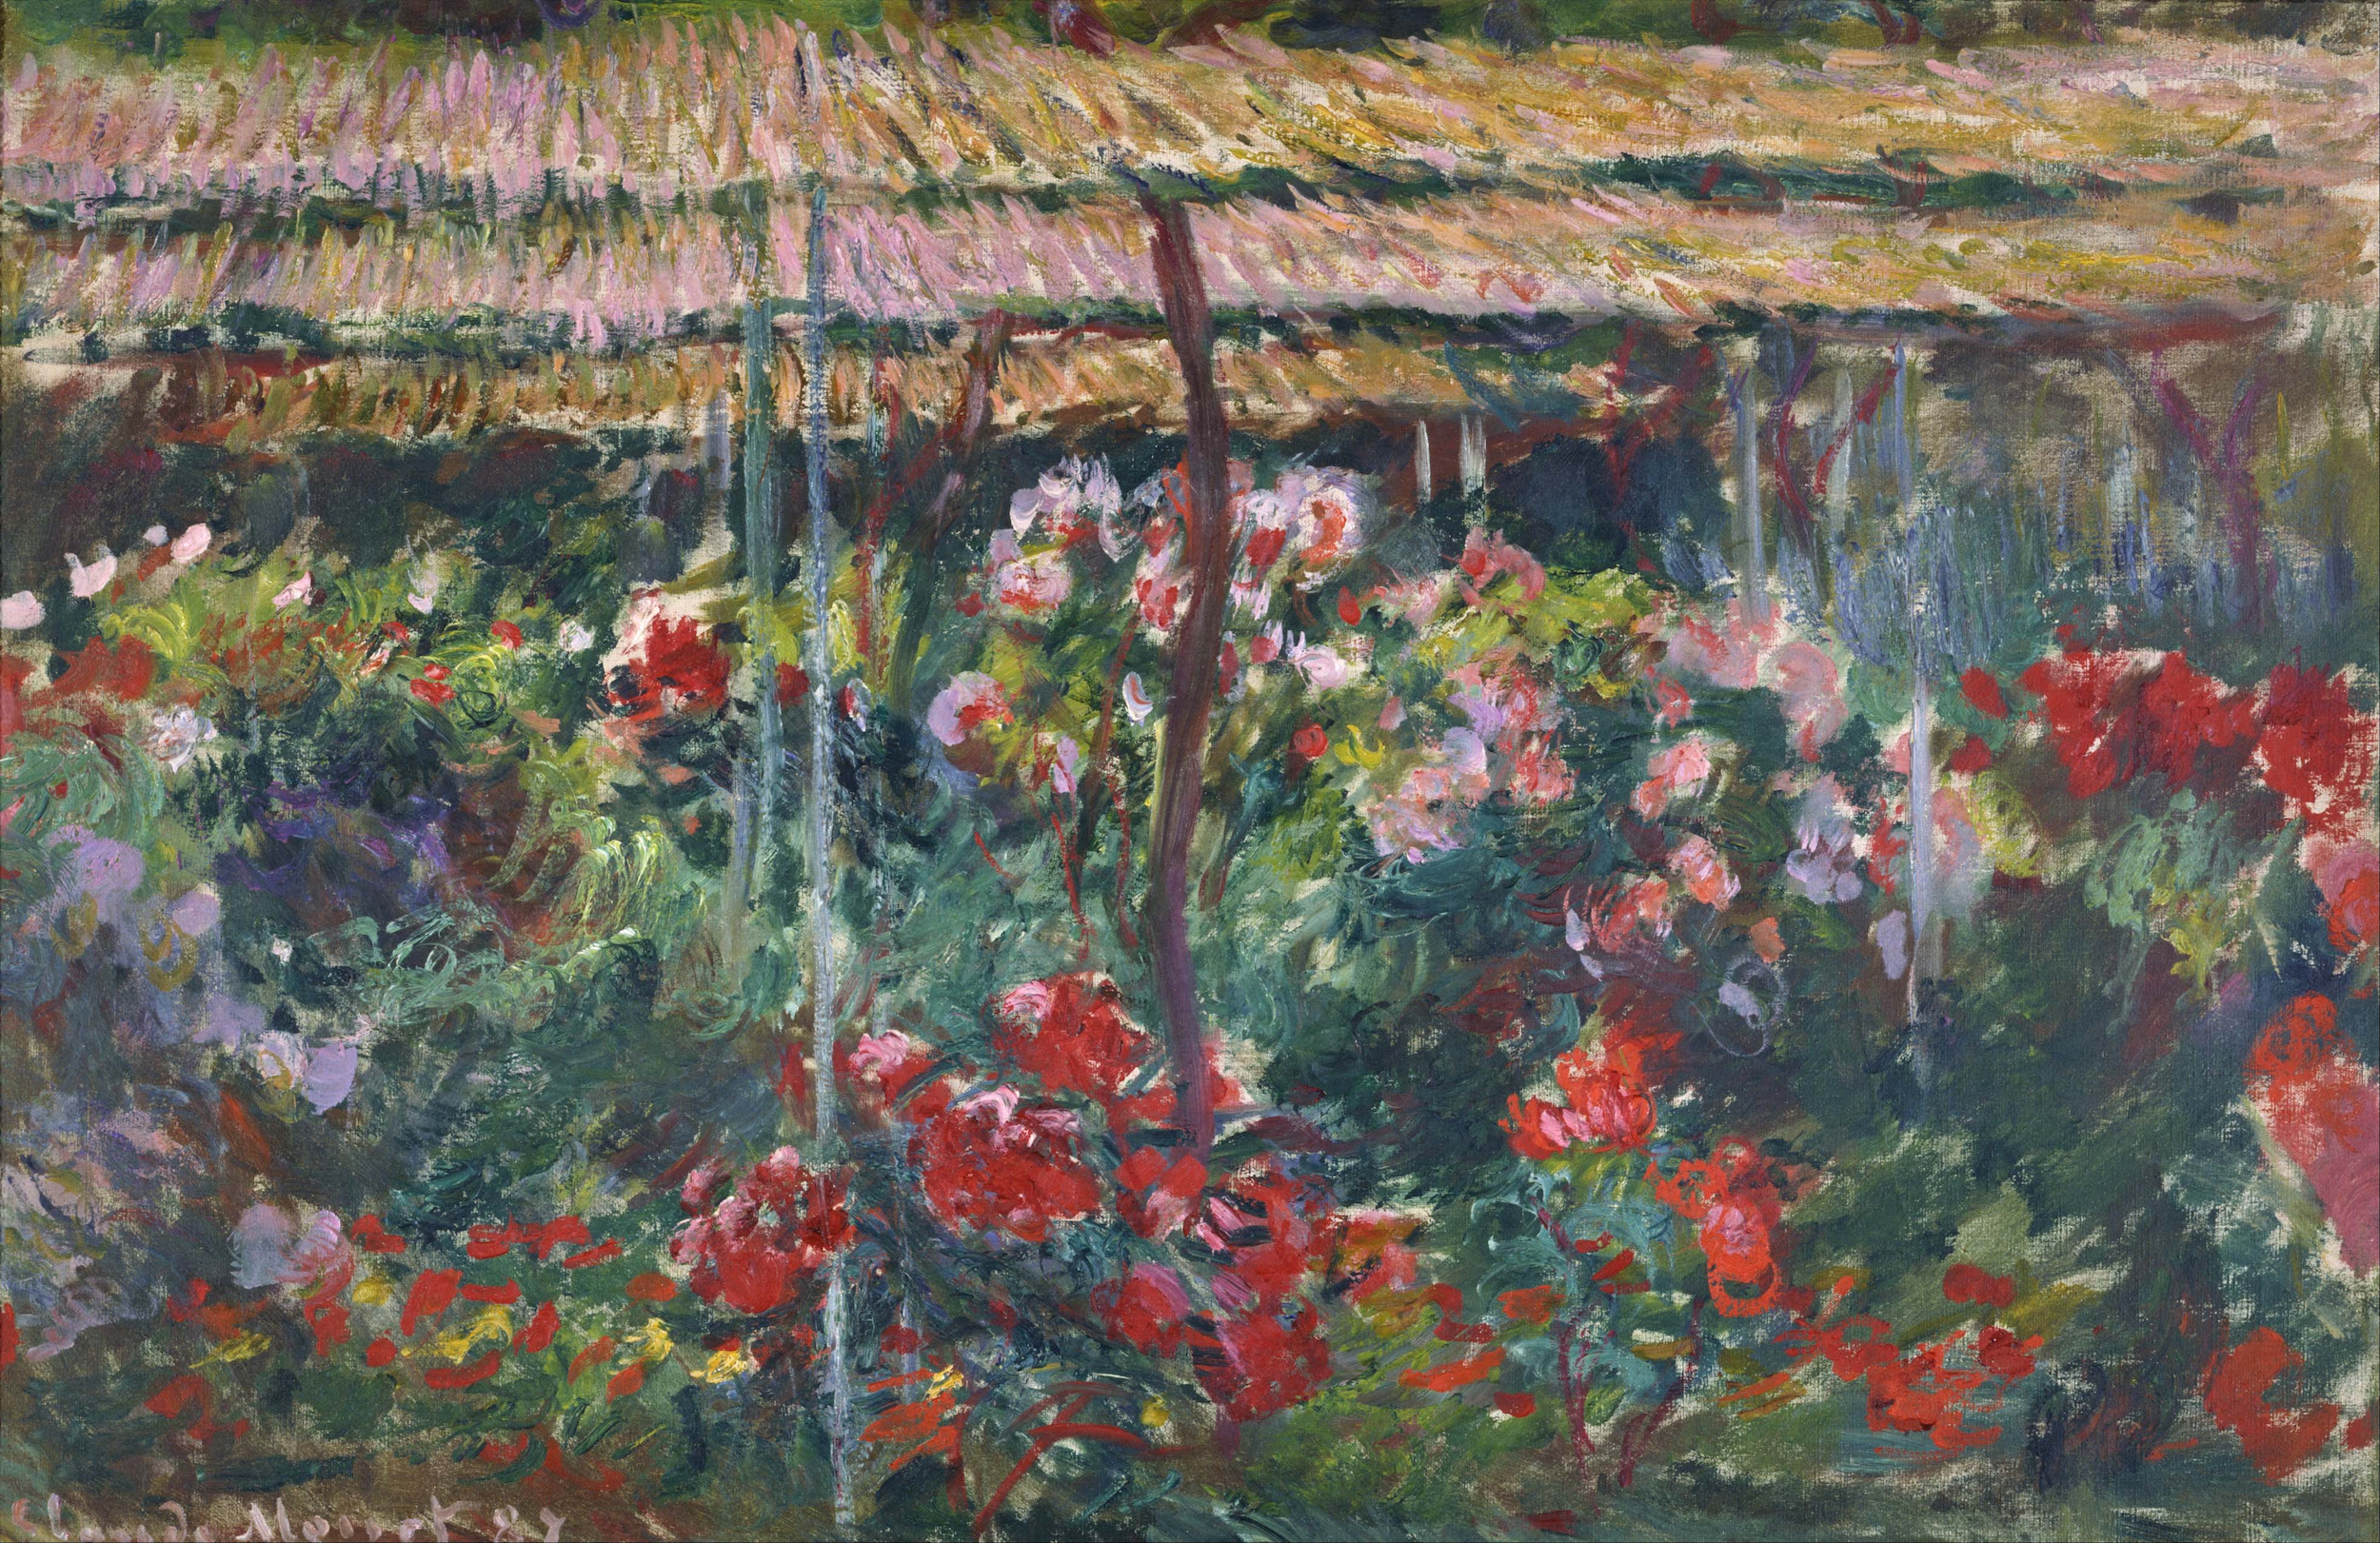 Giardino di peonie by Claude Monet - 1887 - 100 x 65,3 cm 